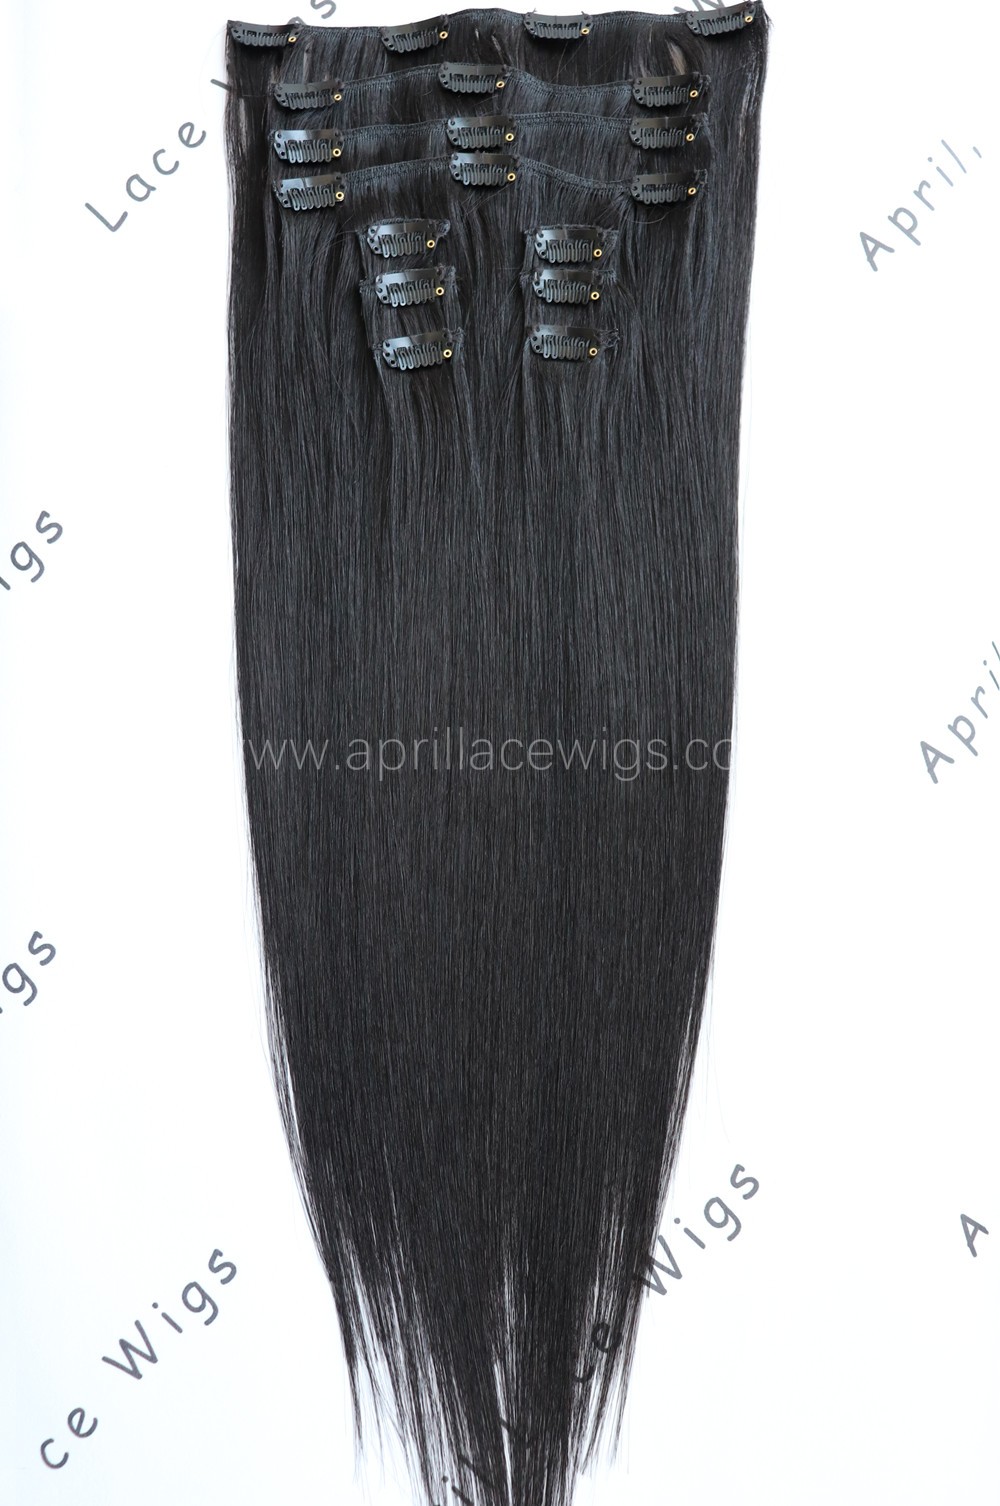 Silk straight human hair clips in hair extensions